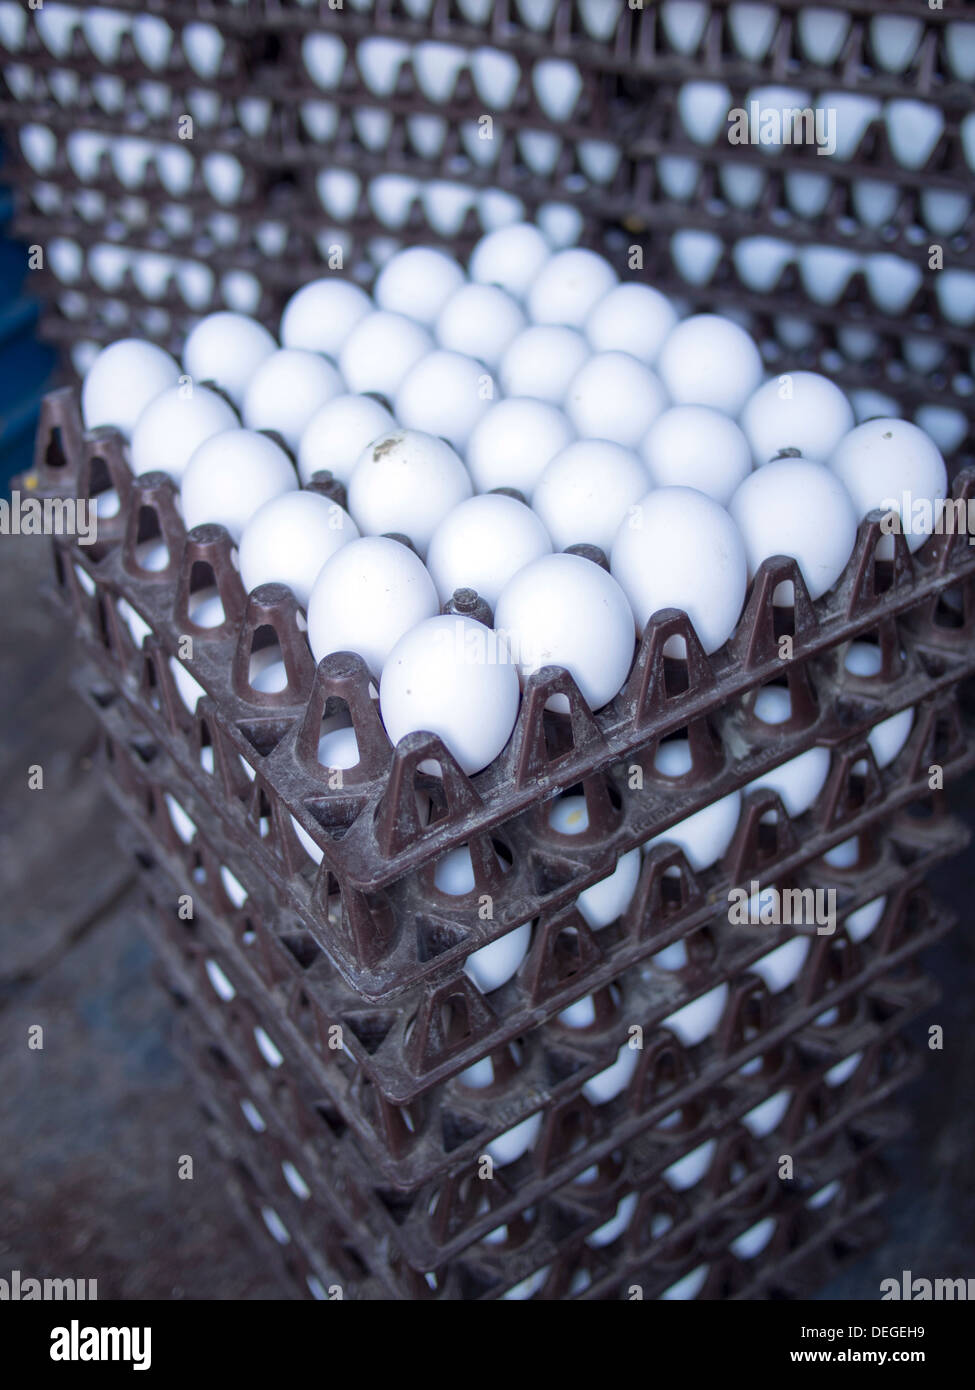 Eggs get stacked in crates in Bangalore, Karnataka, India. Stock Photo